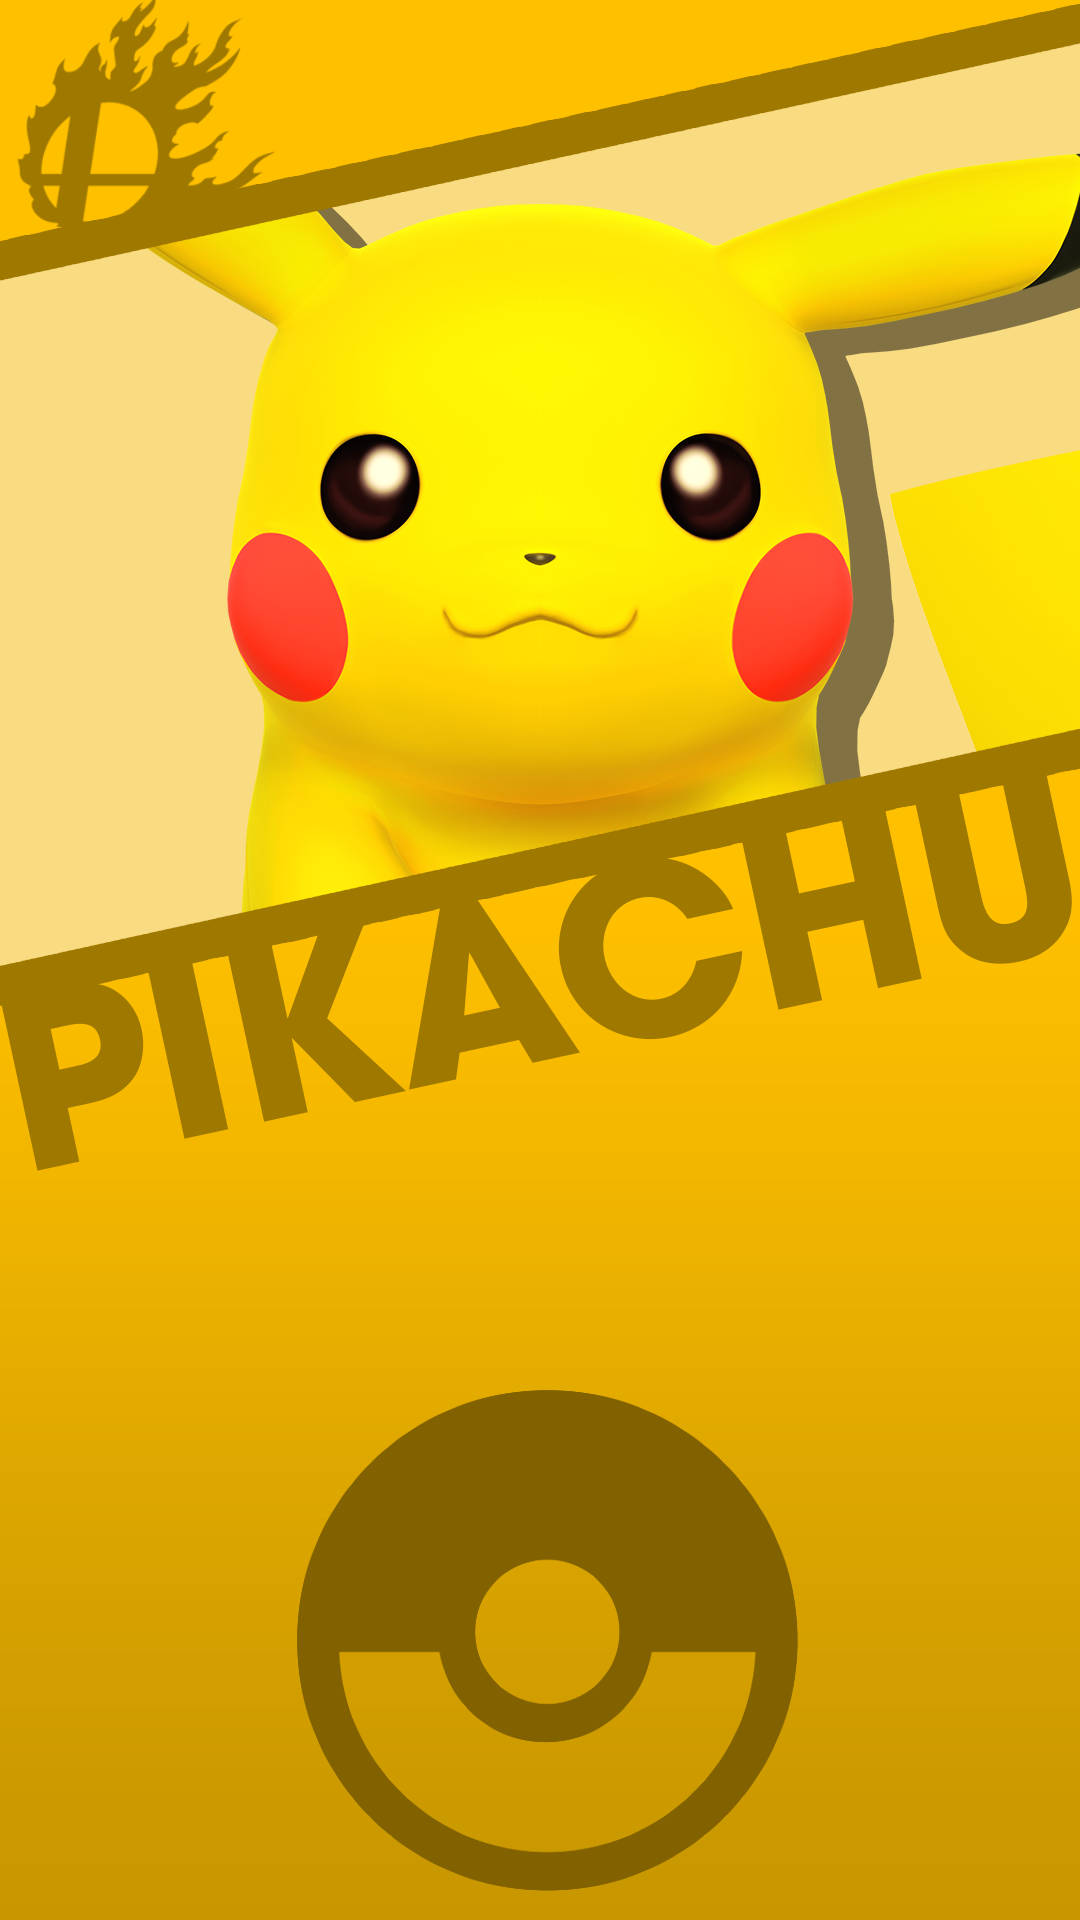 Cute Pikachu iPhone Card Wallpaper